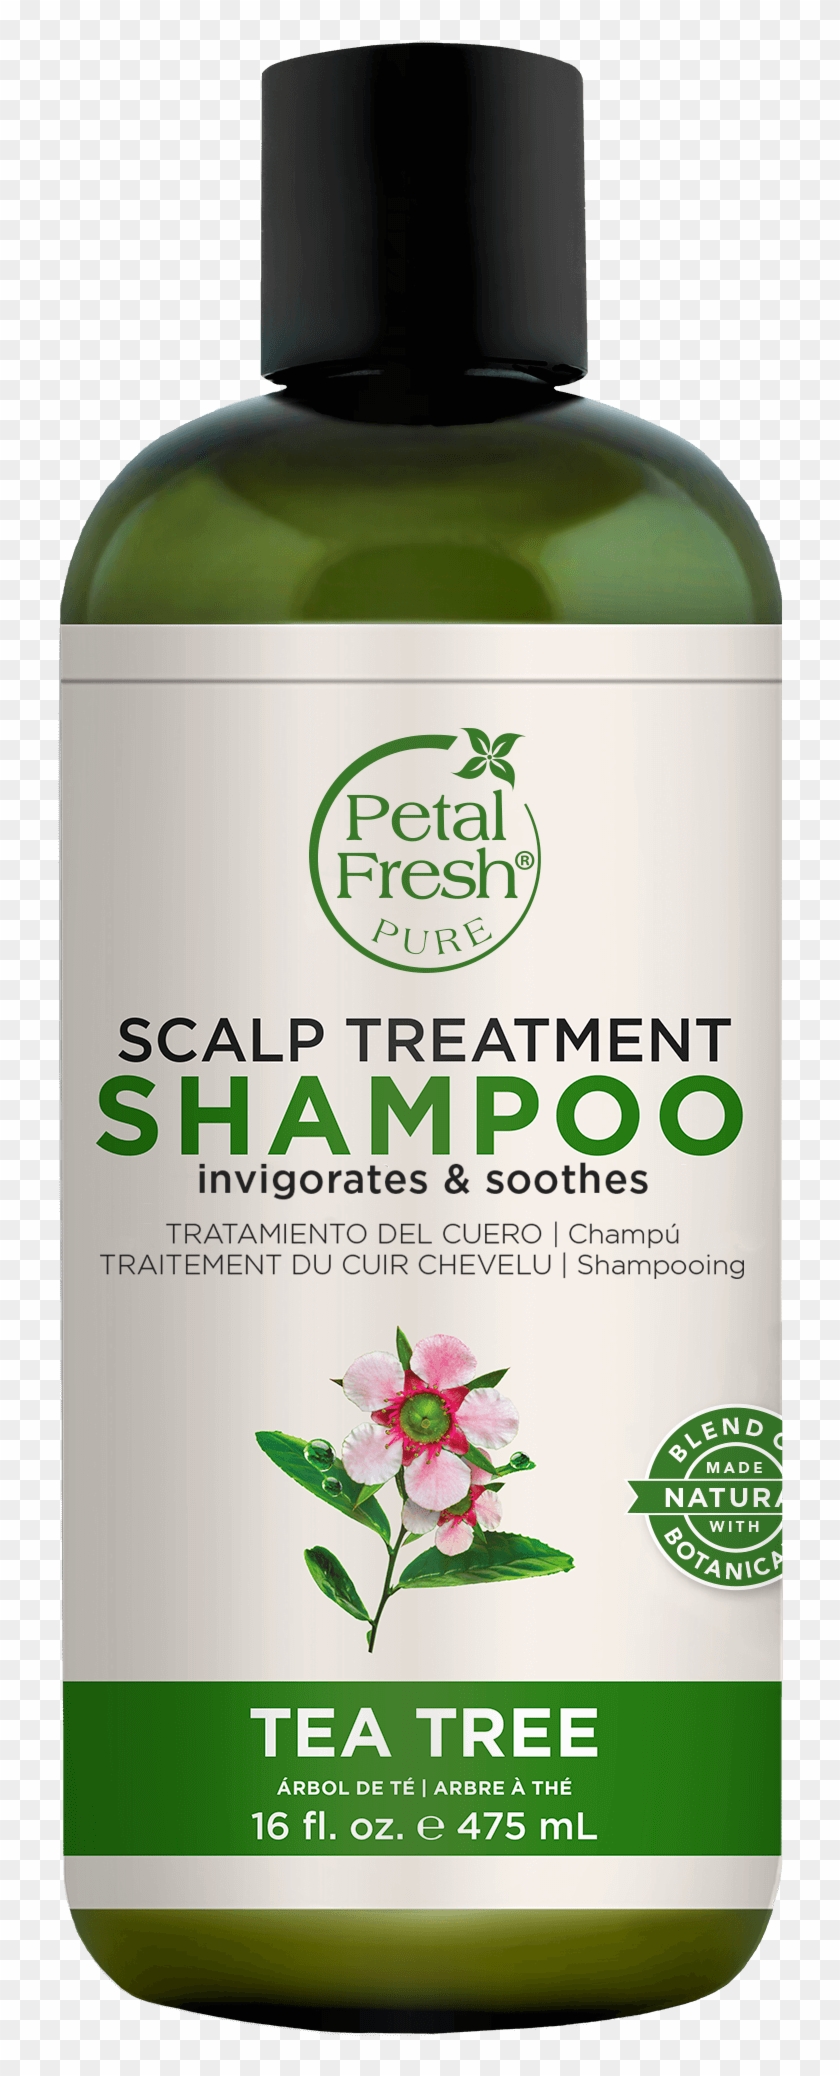 Tea Tree - Petal Fresh Shampoo Clipart #5473540